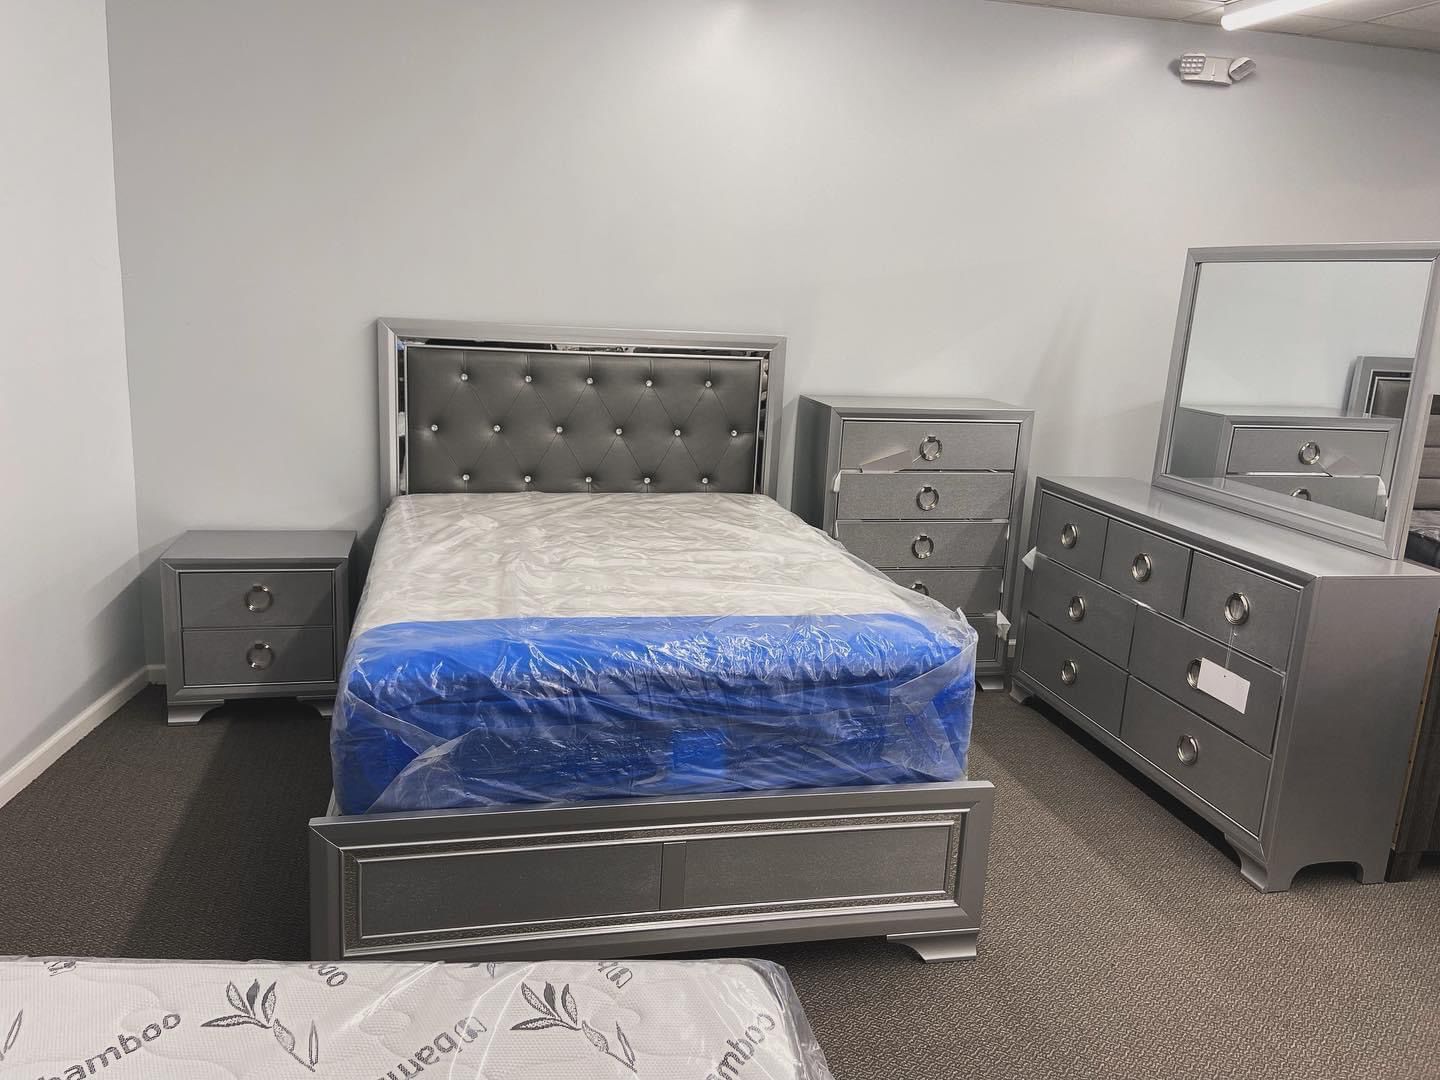 Brand new complete bedroom set for $1299